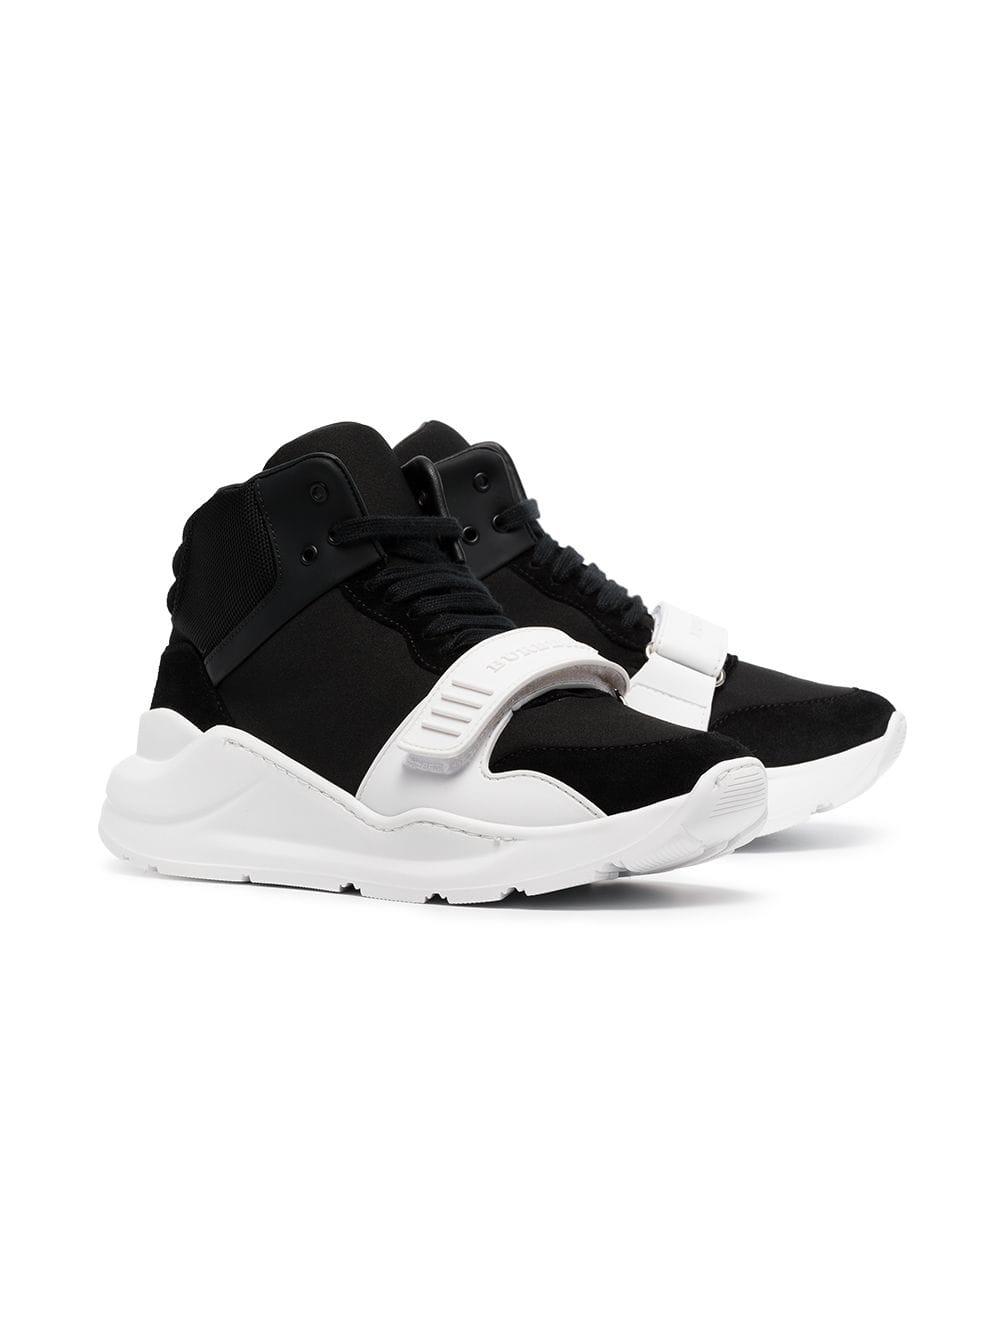 Burberry Synthetic Regis Sneakers in Black | Lyst